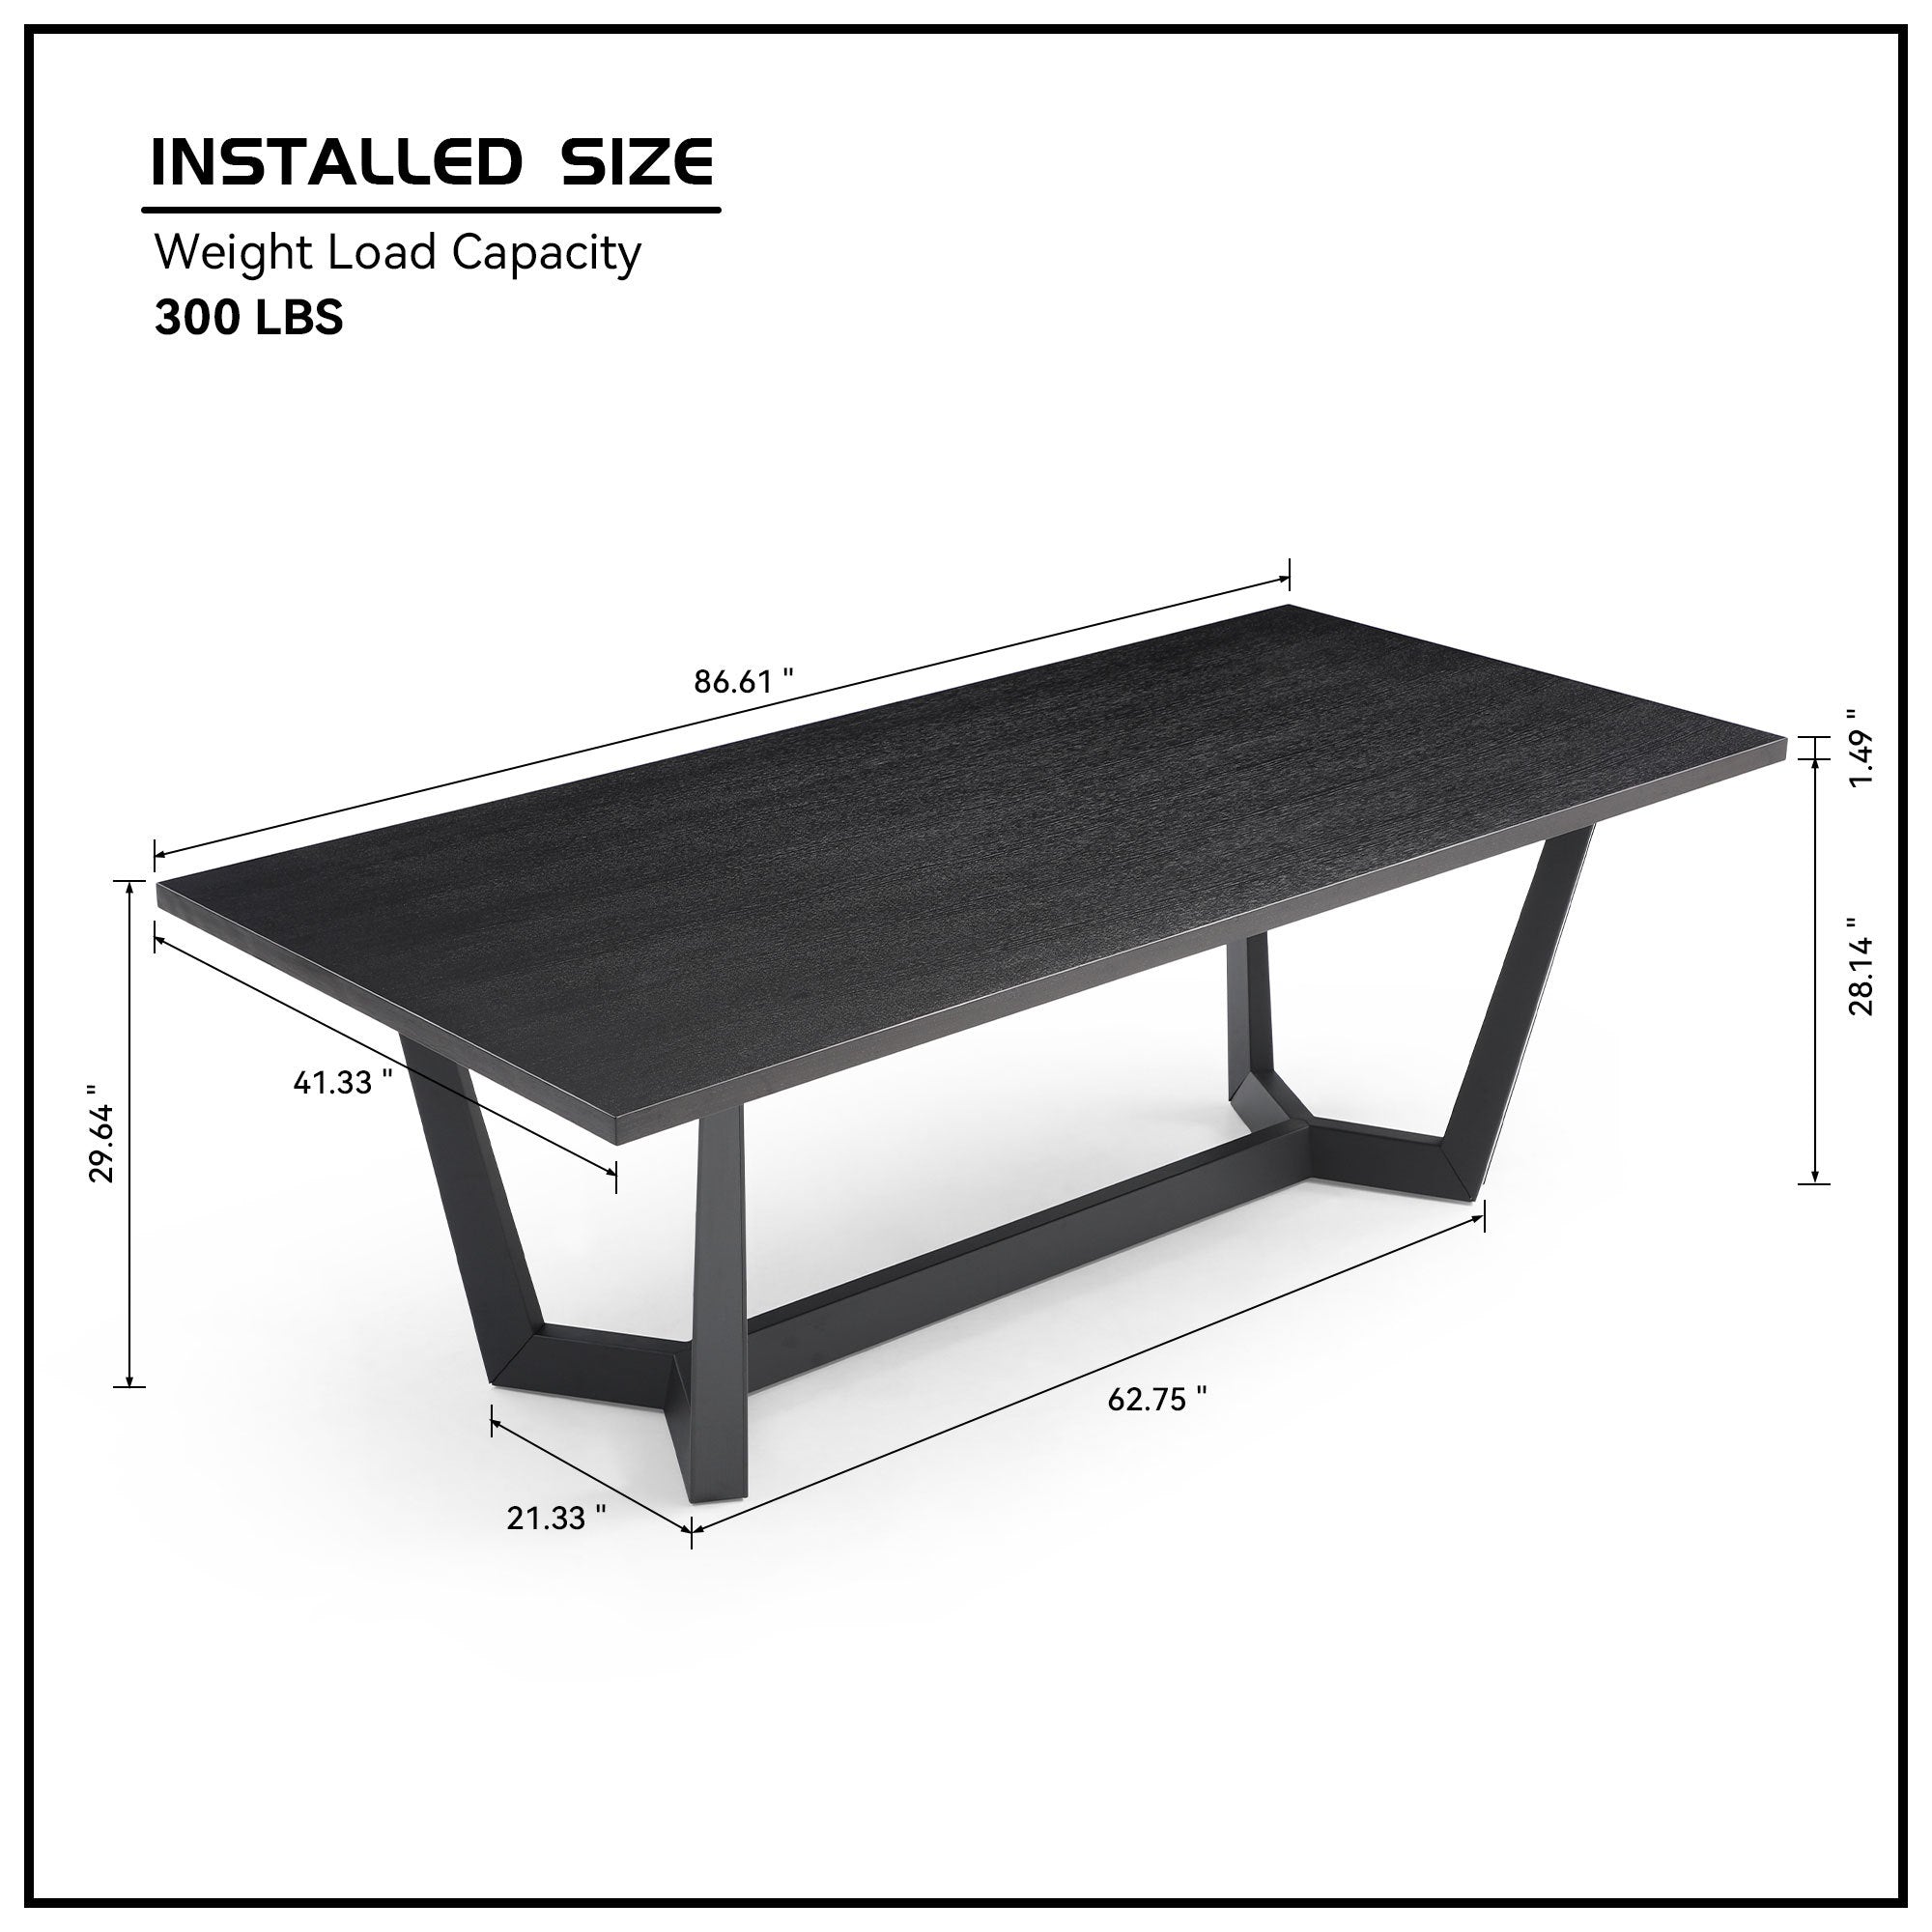 86.86" Dining Table Mid Century Modern Rectangle MDF matt black-foam-mdf+steel